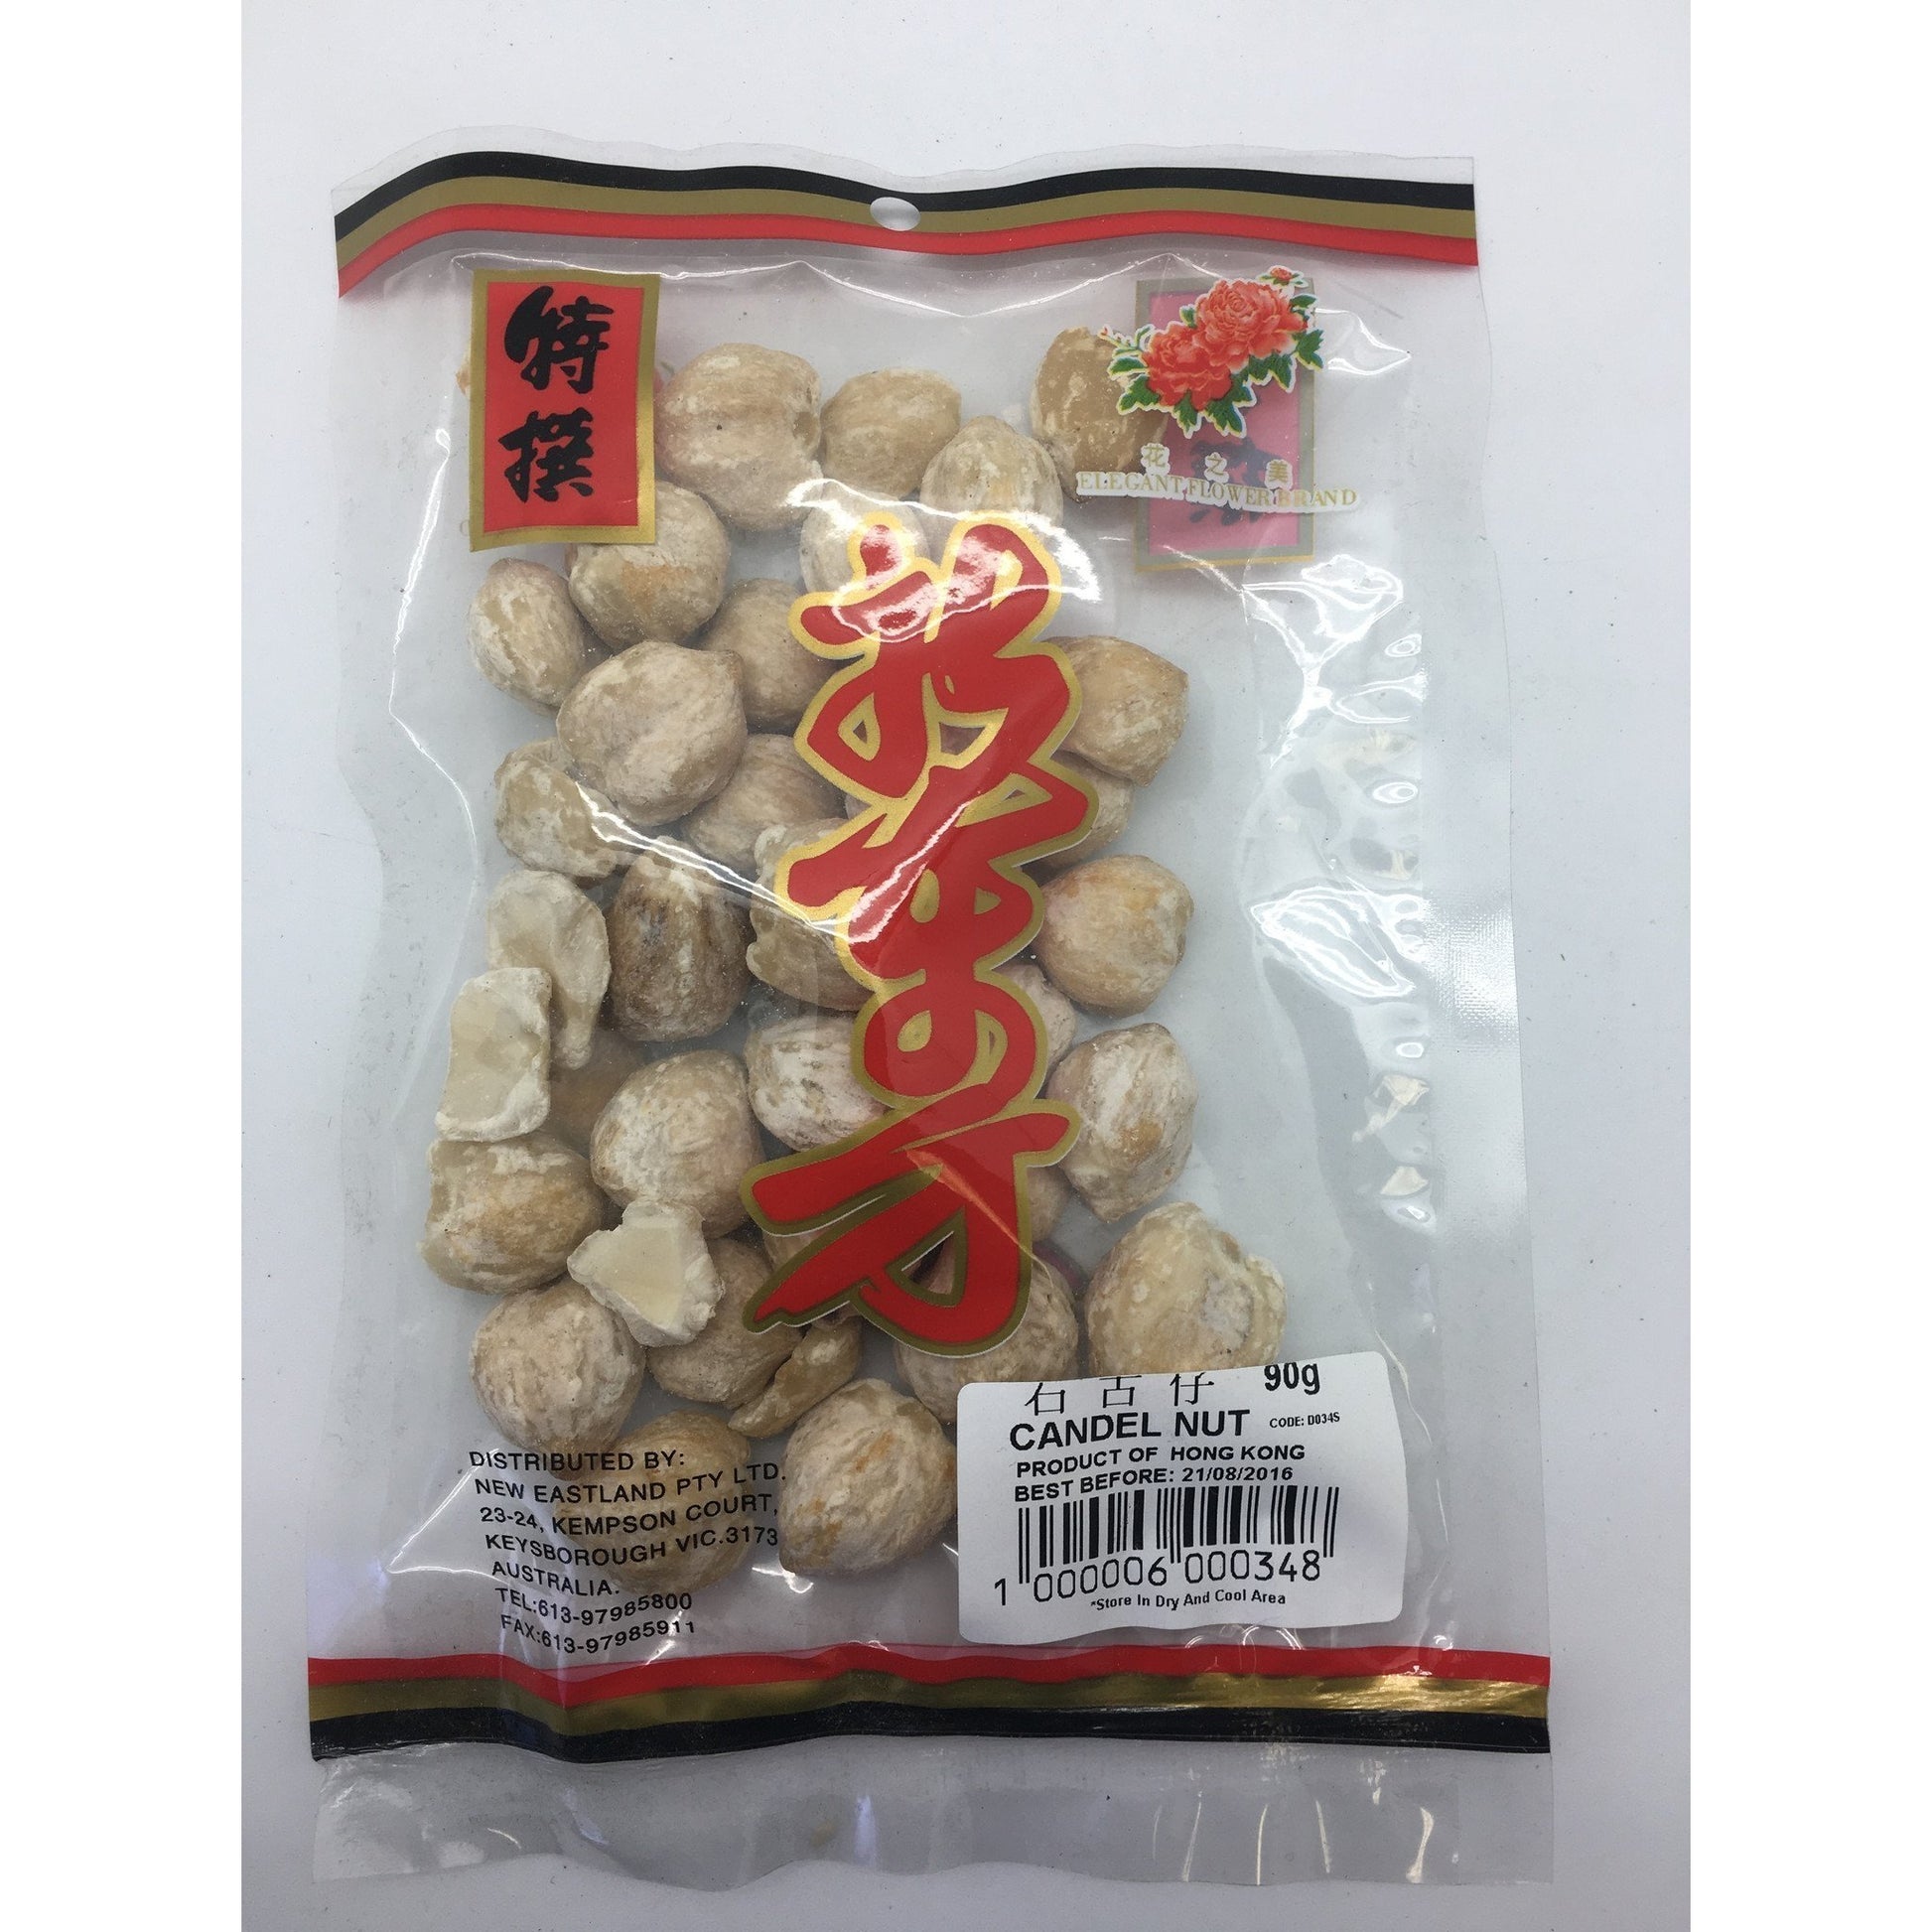 D034S New Eastland Pty Ltd - Candel nut 90g - 50 bags / 1 CTN - New Eastland Pty Ltd - Asian food wholesalers